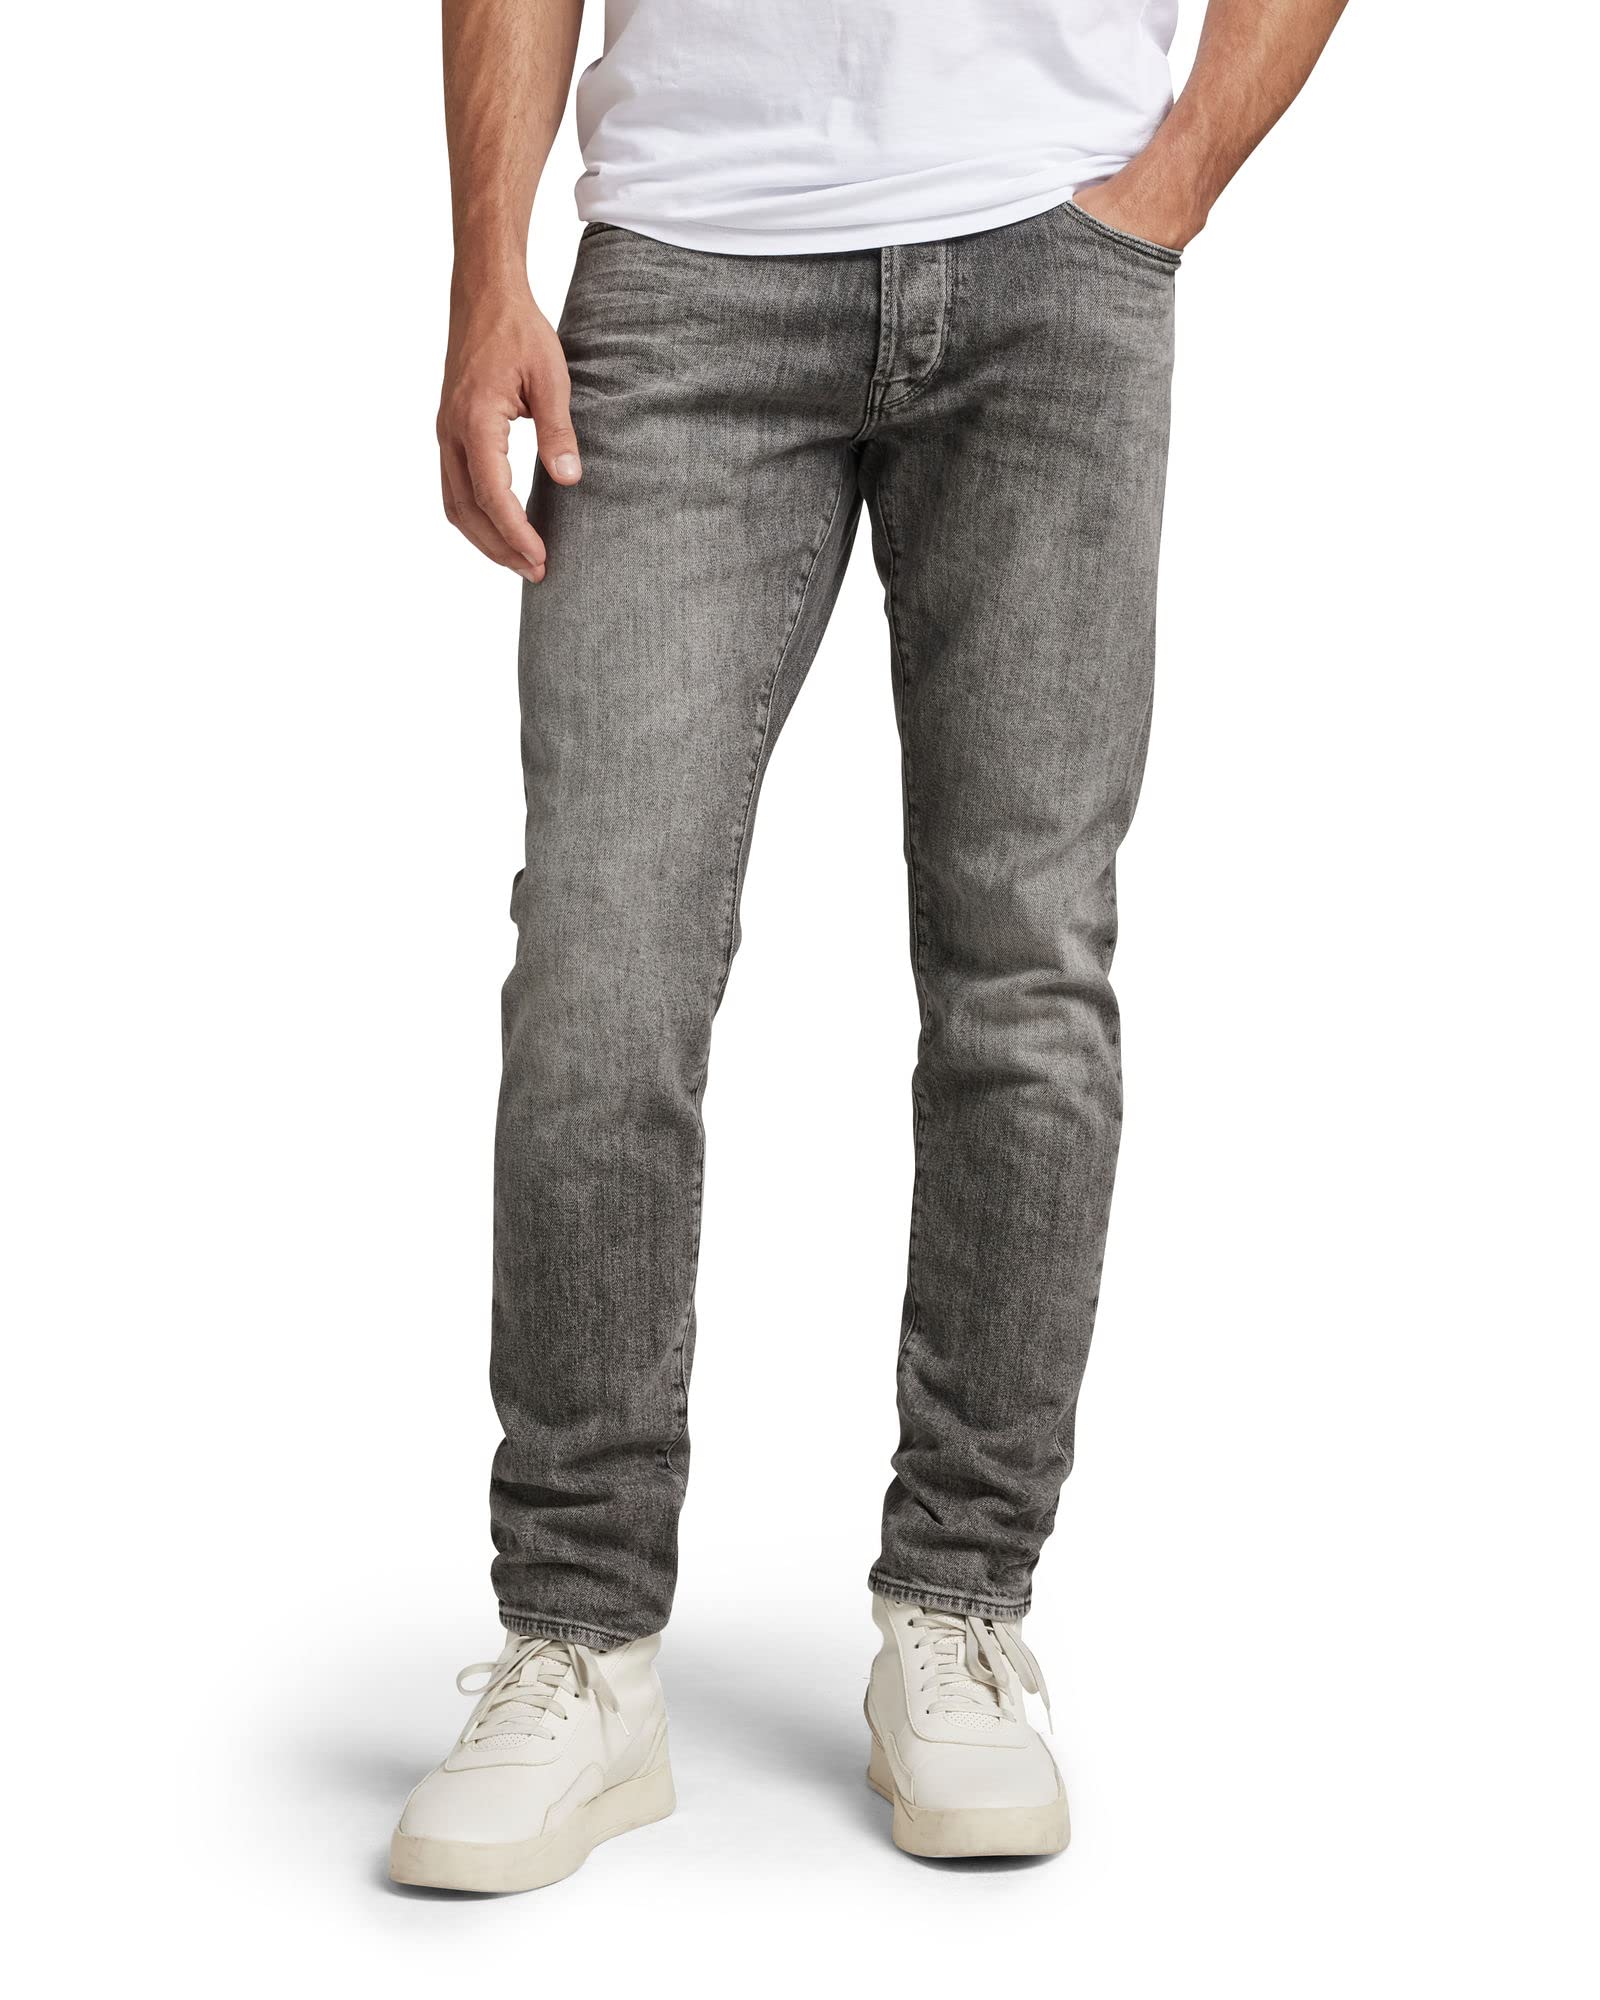 G-STAR RAW Herren 3301 Slim Jeans, Grau (faded carbon 51001-C909-C762), 30W / 34L